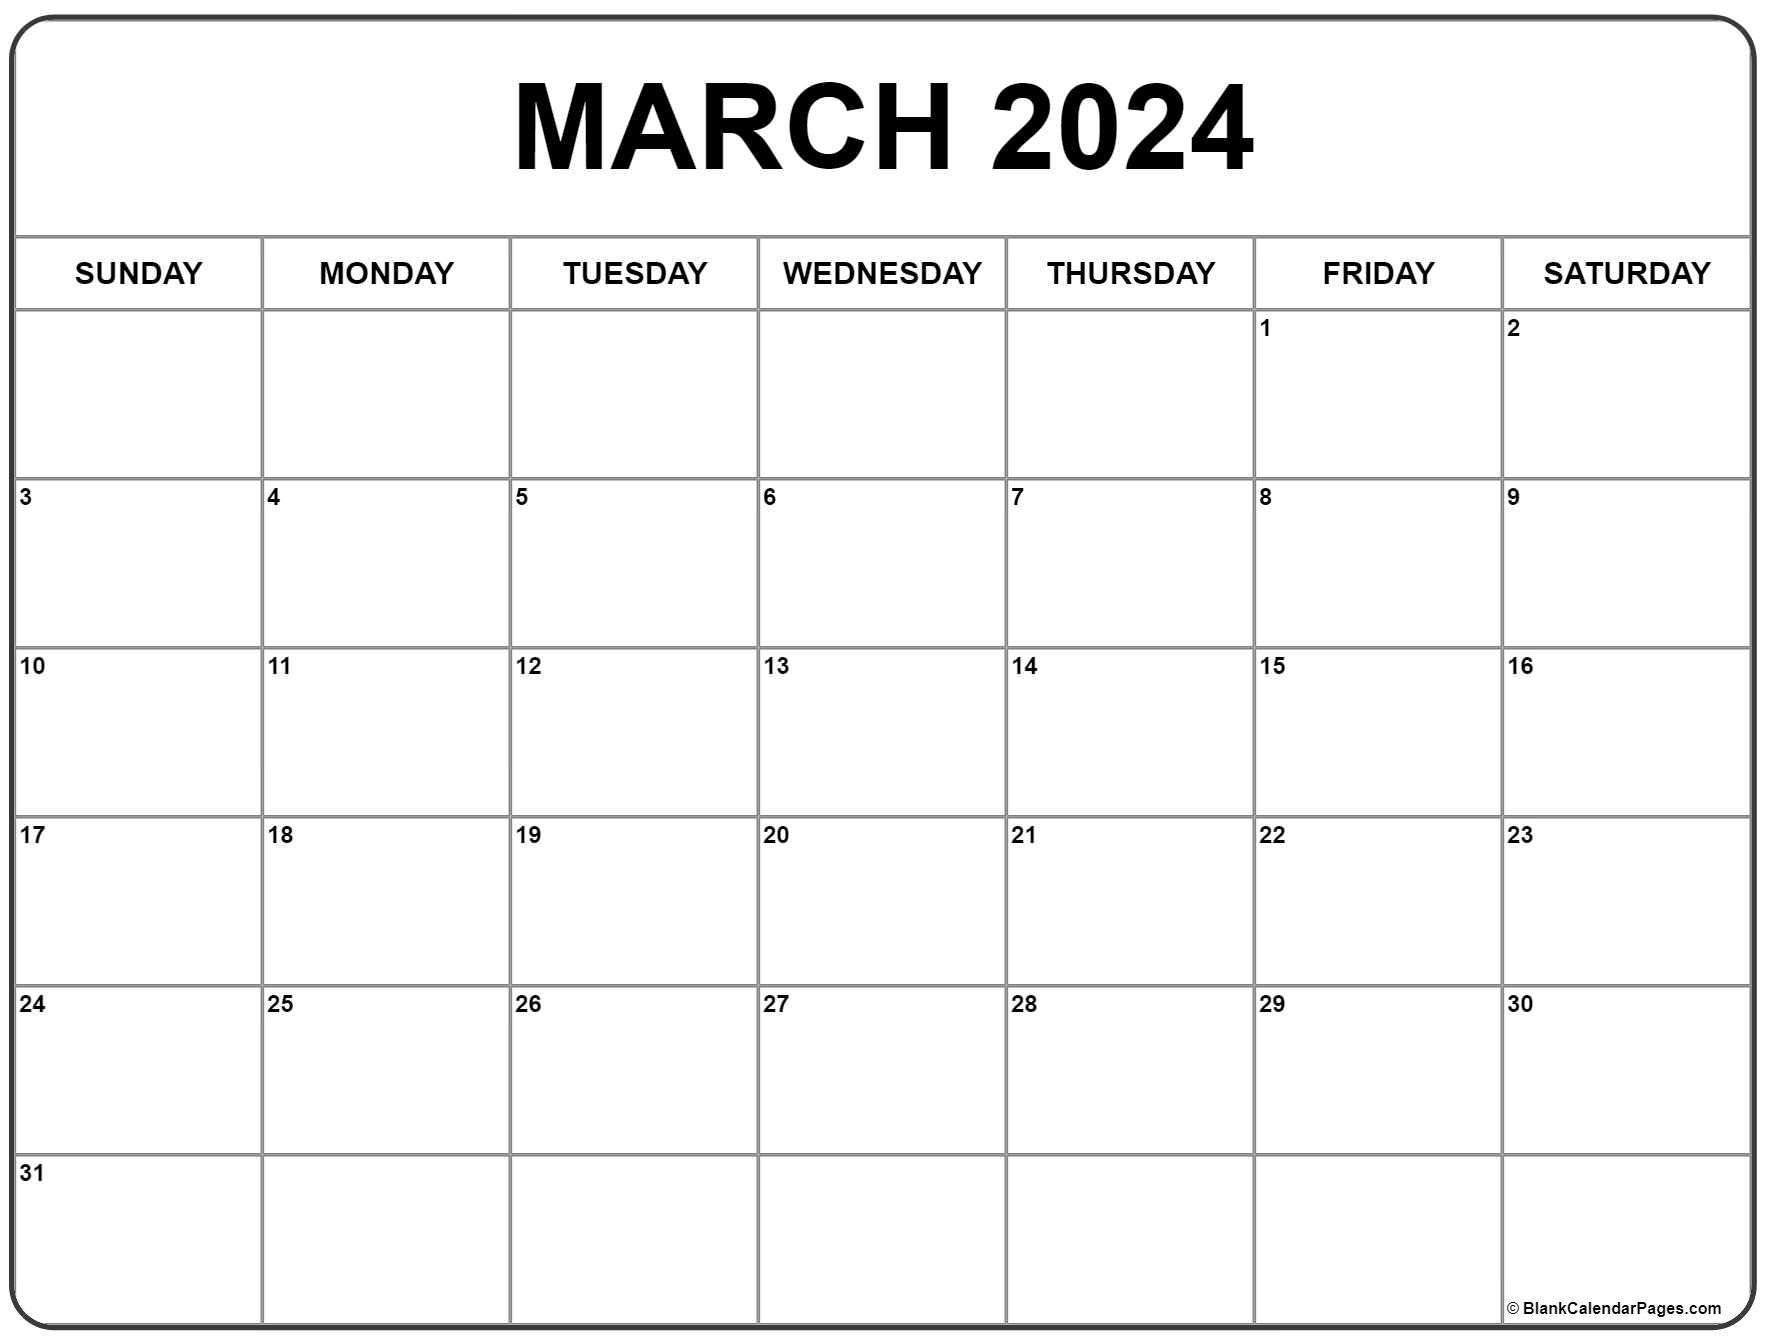 March 2022 Monthly Calendar March 2022 Calendar | Free Printable Calendar Templates